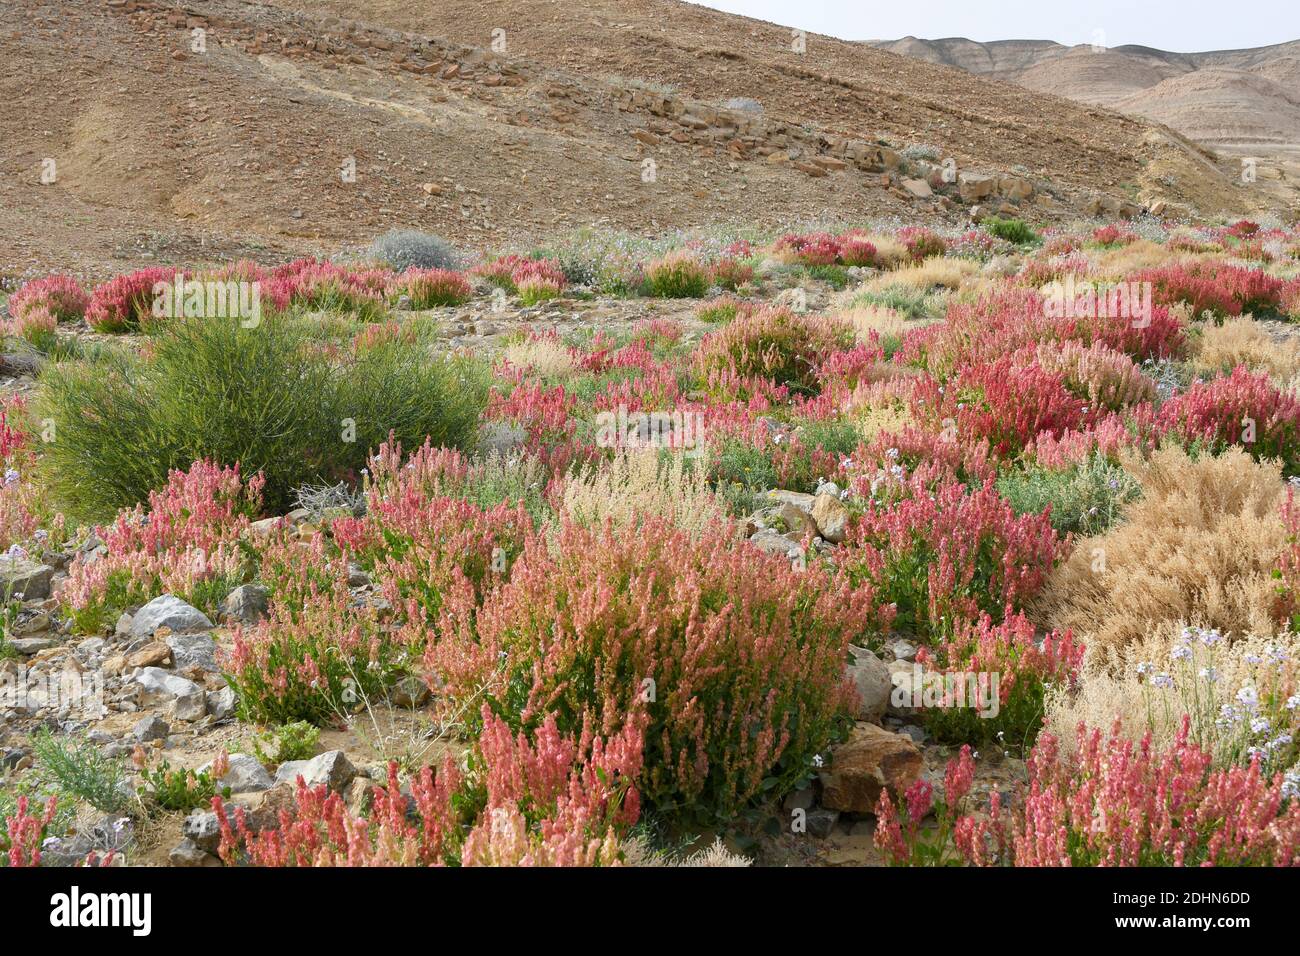 Knotweed sorrel (Rumex cyprius syn Rumex roseus). After a rare rainy season in the Negev Desert, and Israel in general, an abundance of wildflowers sp Stock Photo